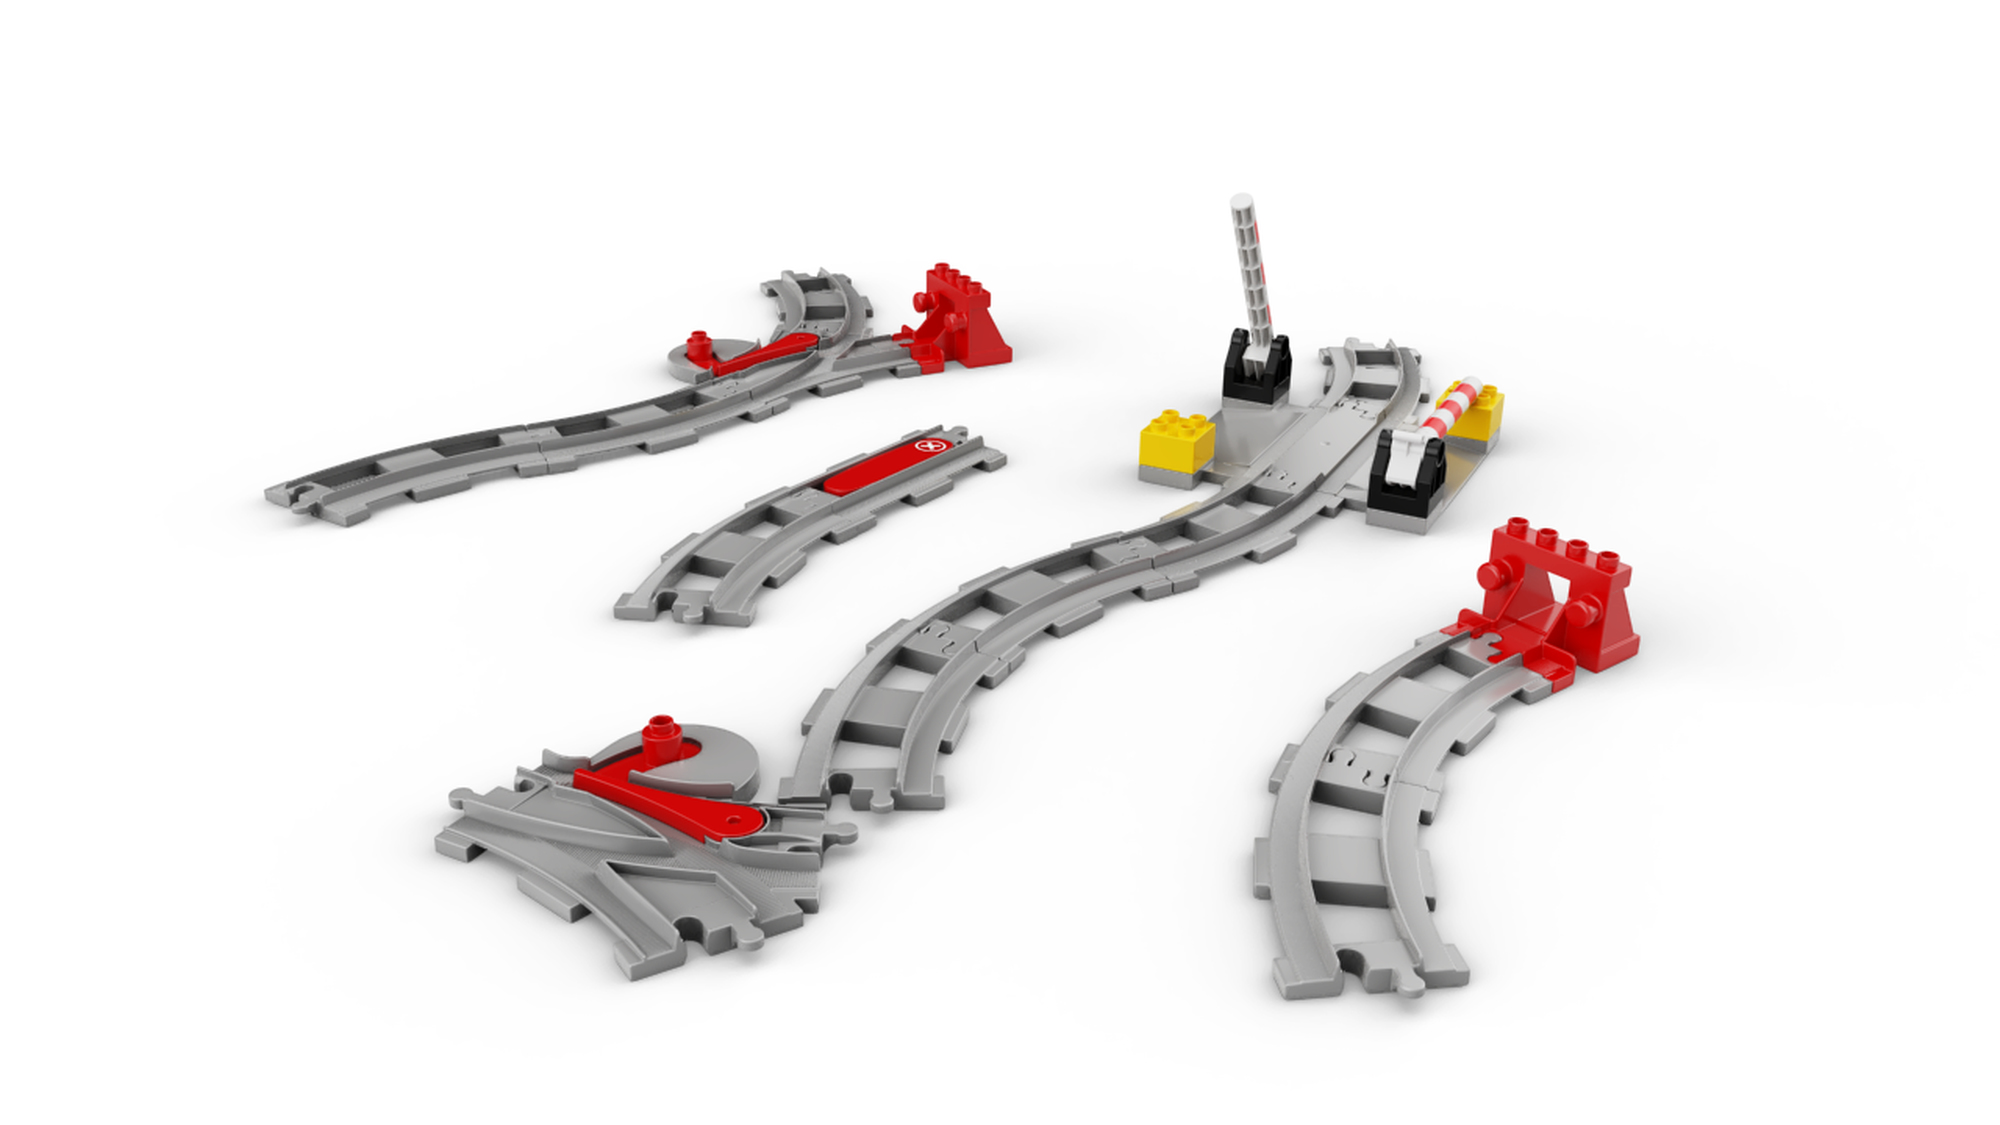 Lego Duplo Train Tracks Railway Set with Action Brick 10882 Ages 2